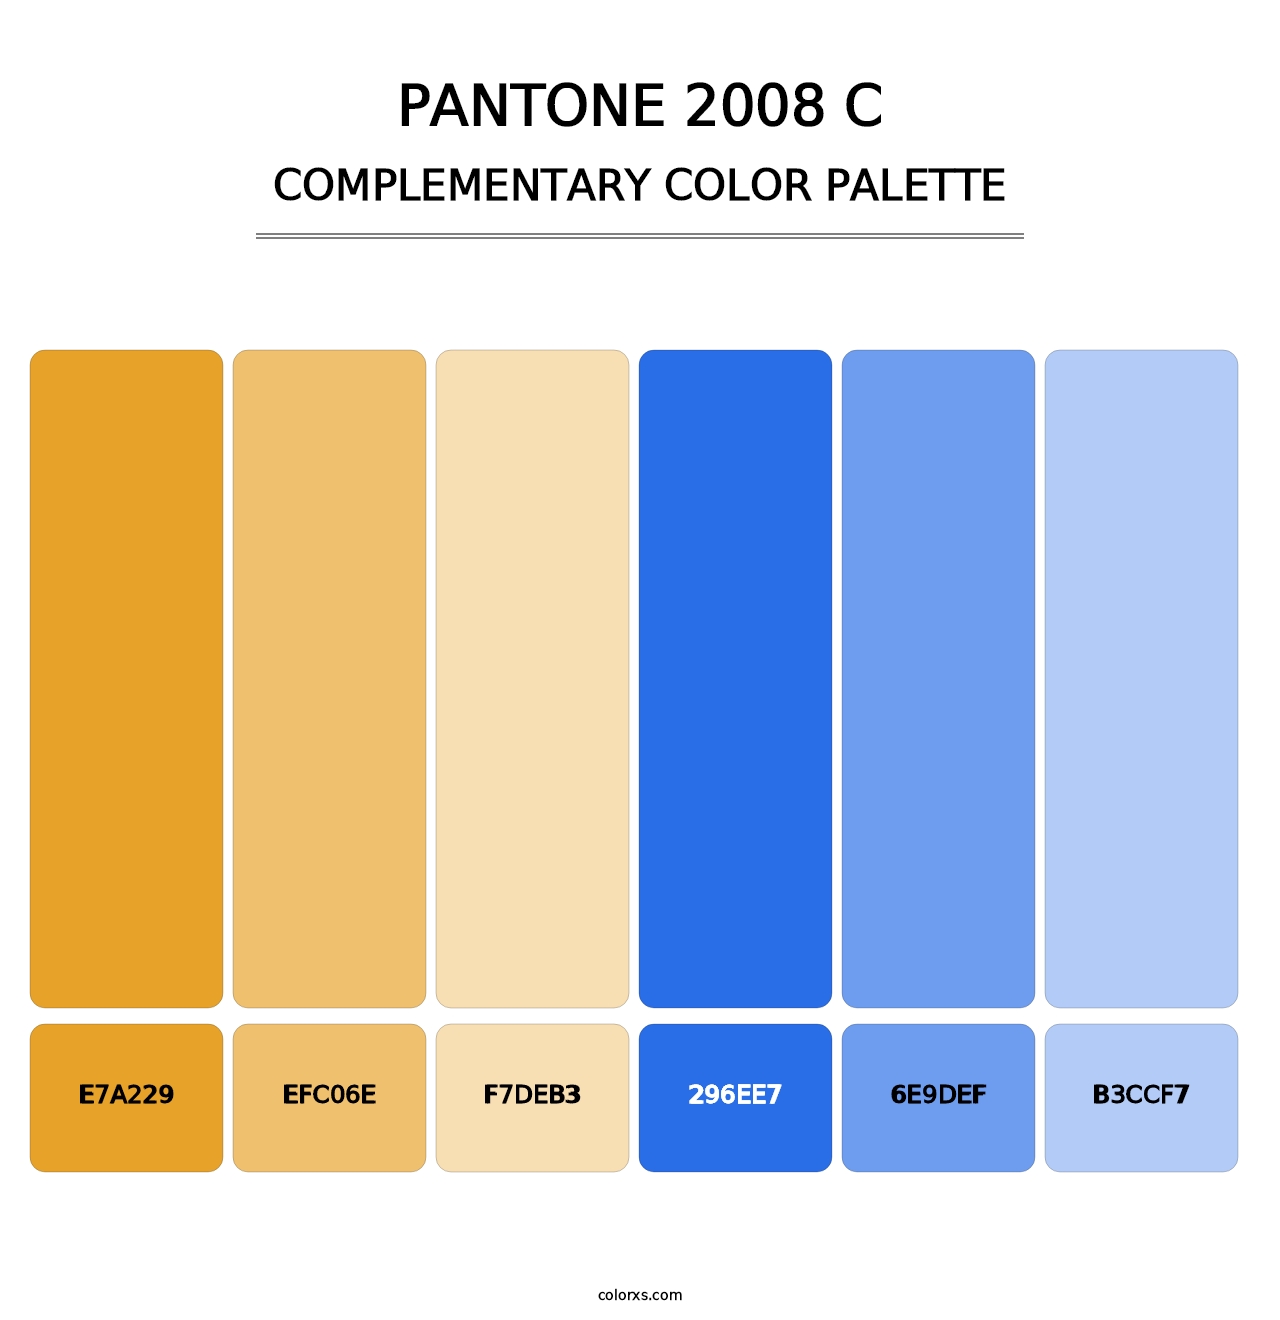 PANTONE 2008 C - Complementary Color Palette